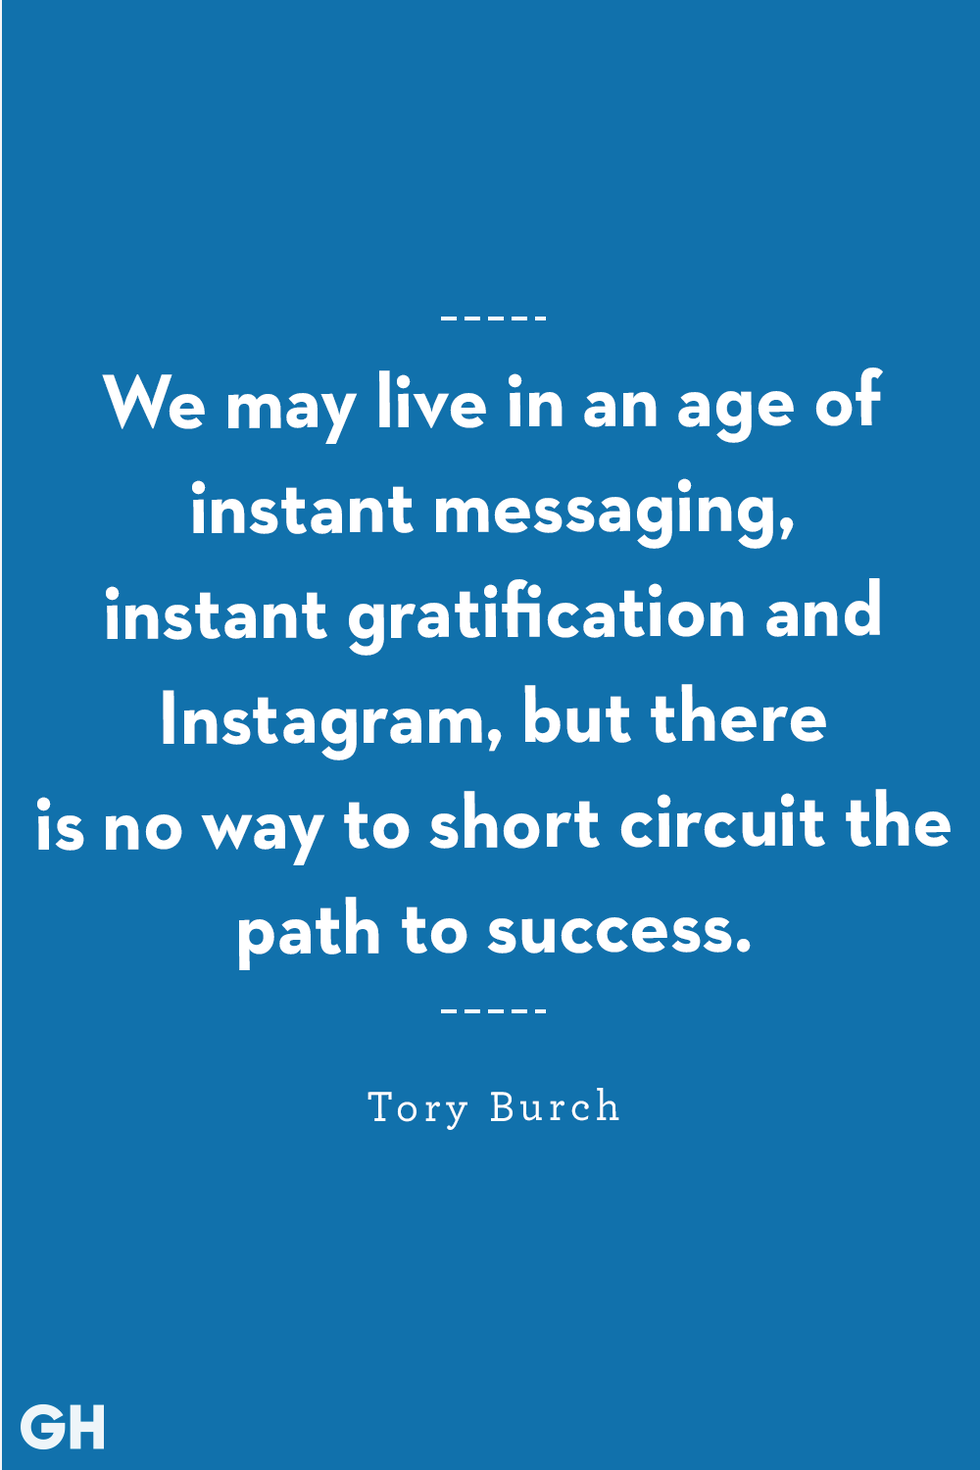 125 Empowering Success Captions & Quotes for Instagram 